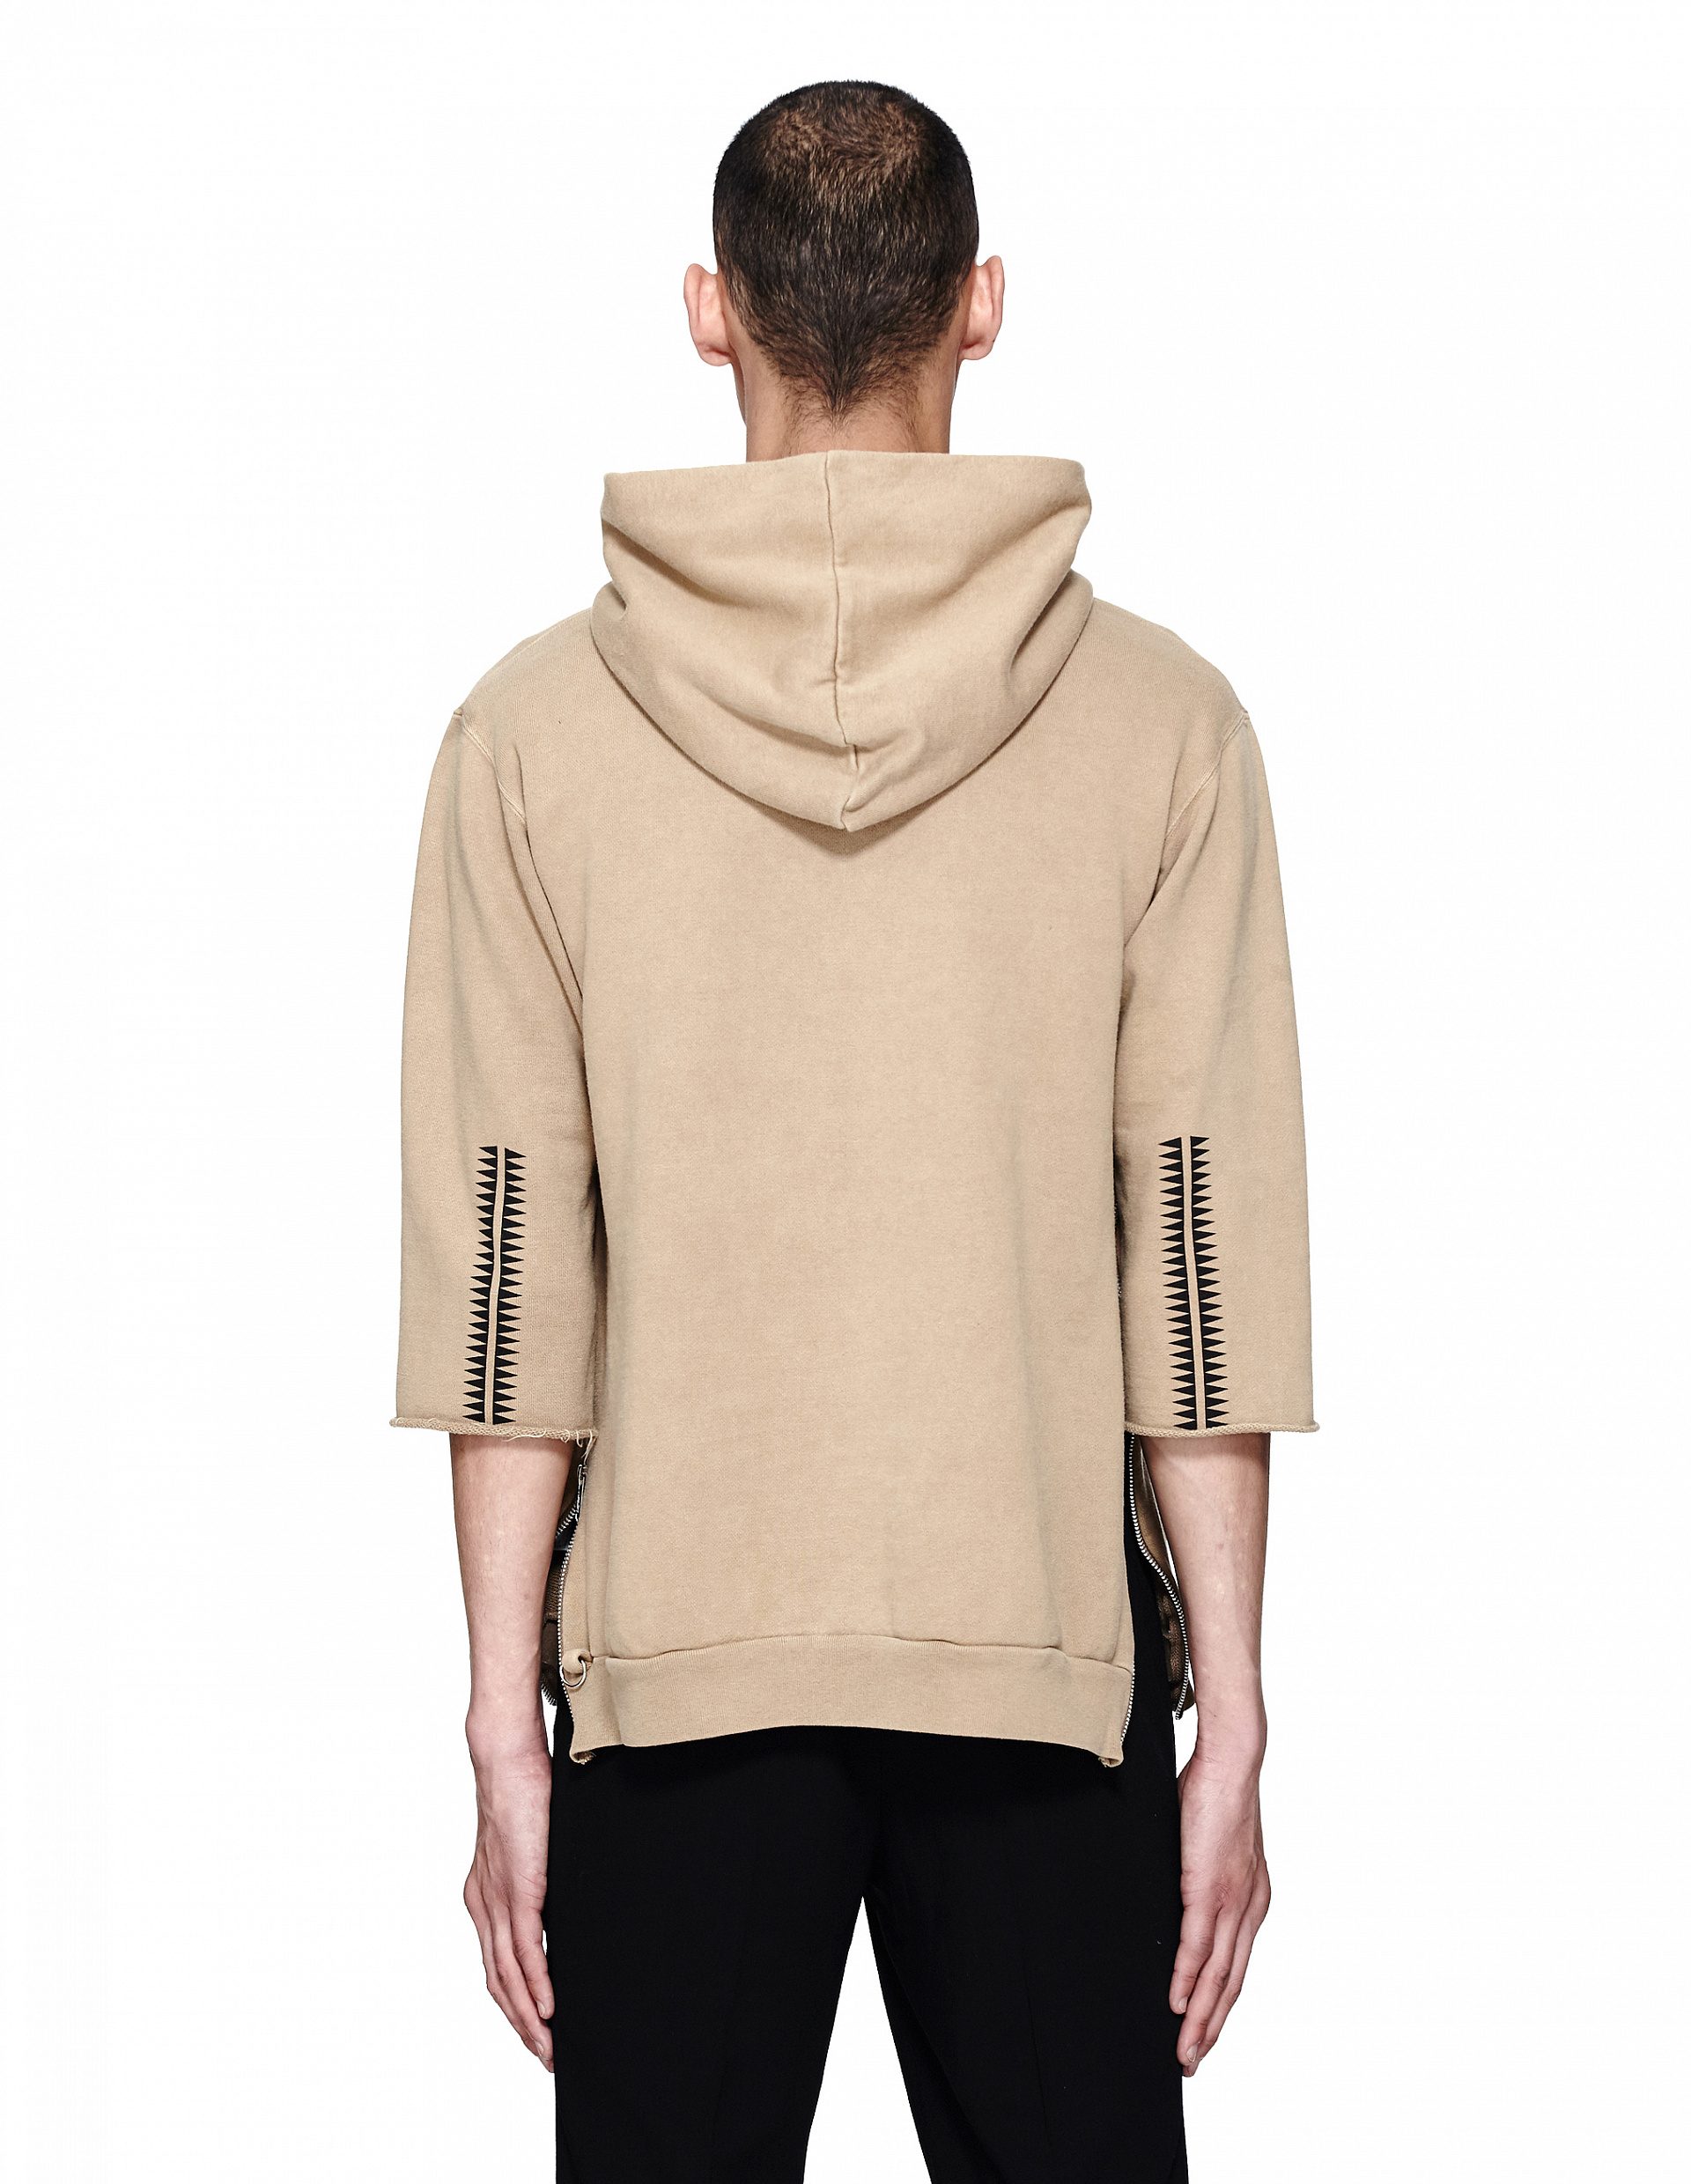 Buy Undercover men beige cotton hoodie for $245 online on SVMOSCOW ...